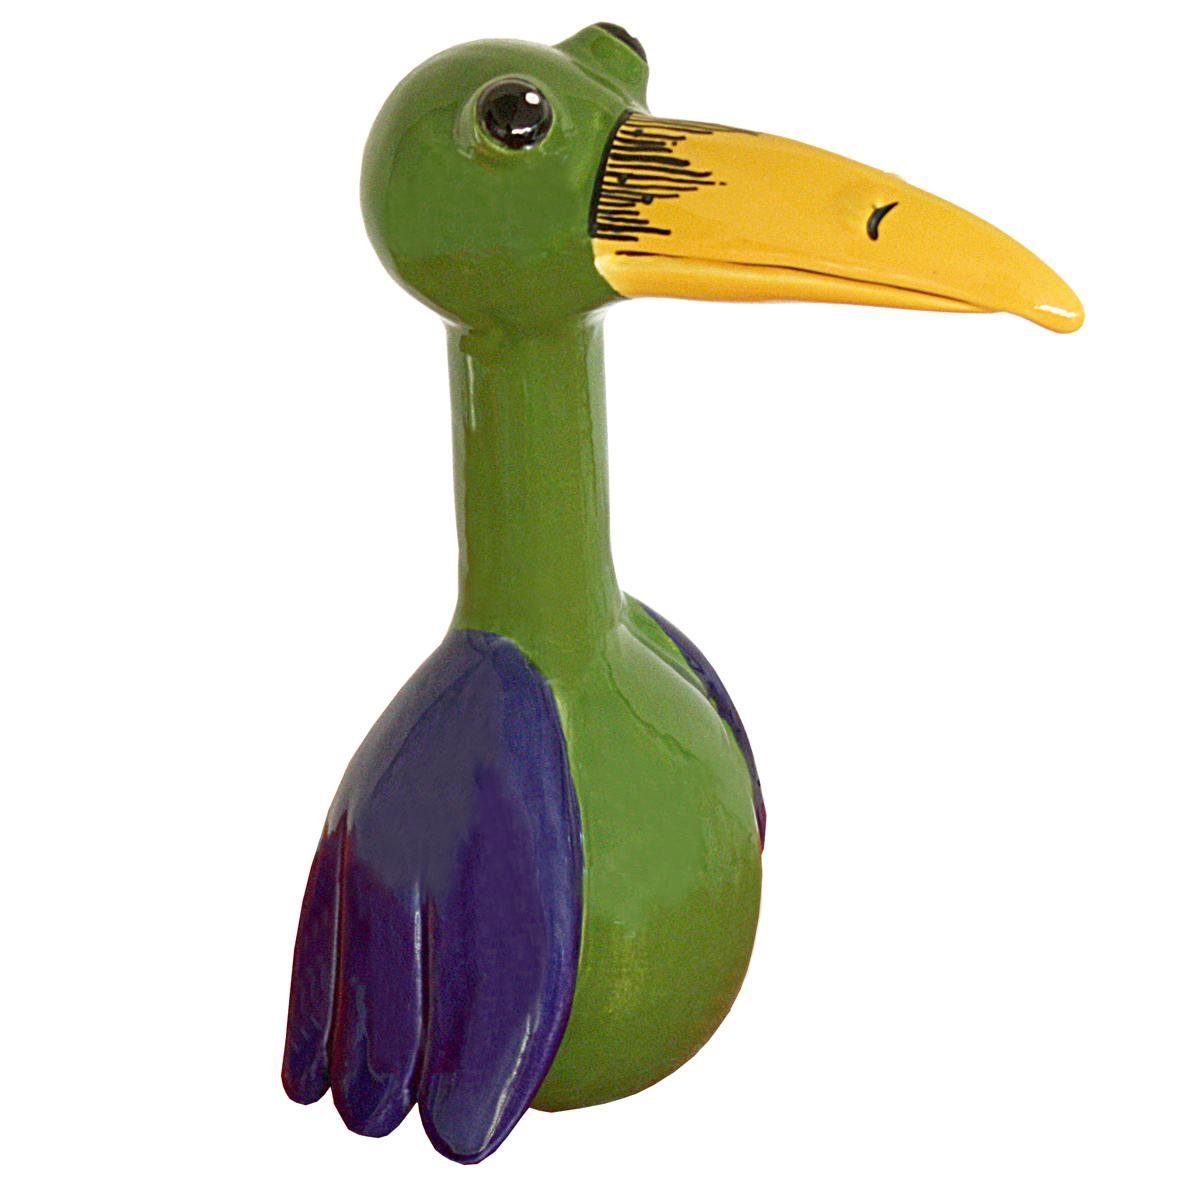 Tangoo-Deko Gartenfigur Tangoo Keramik-Vogel grün sitzend mit langem Schnabel, (Stück)